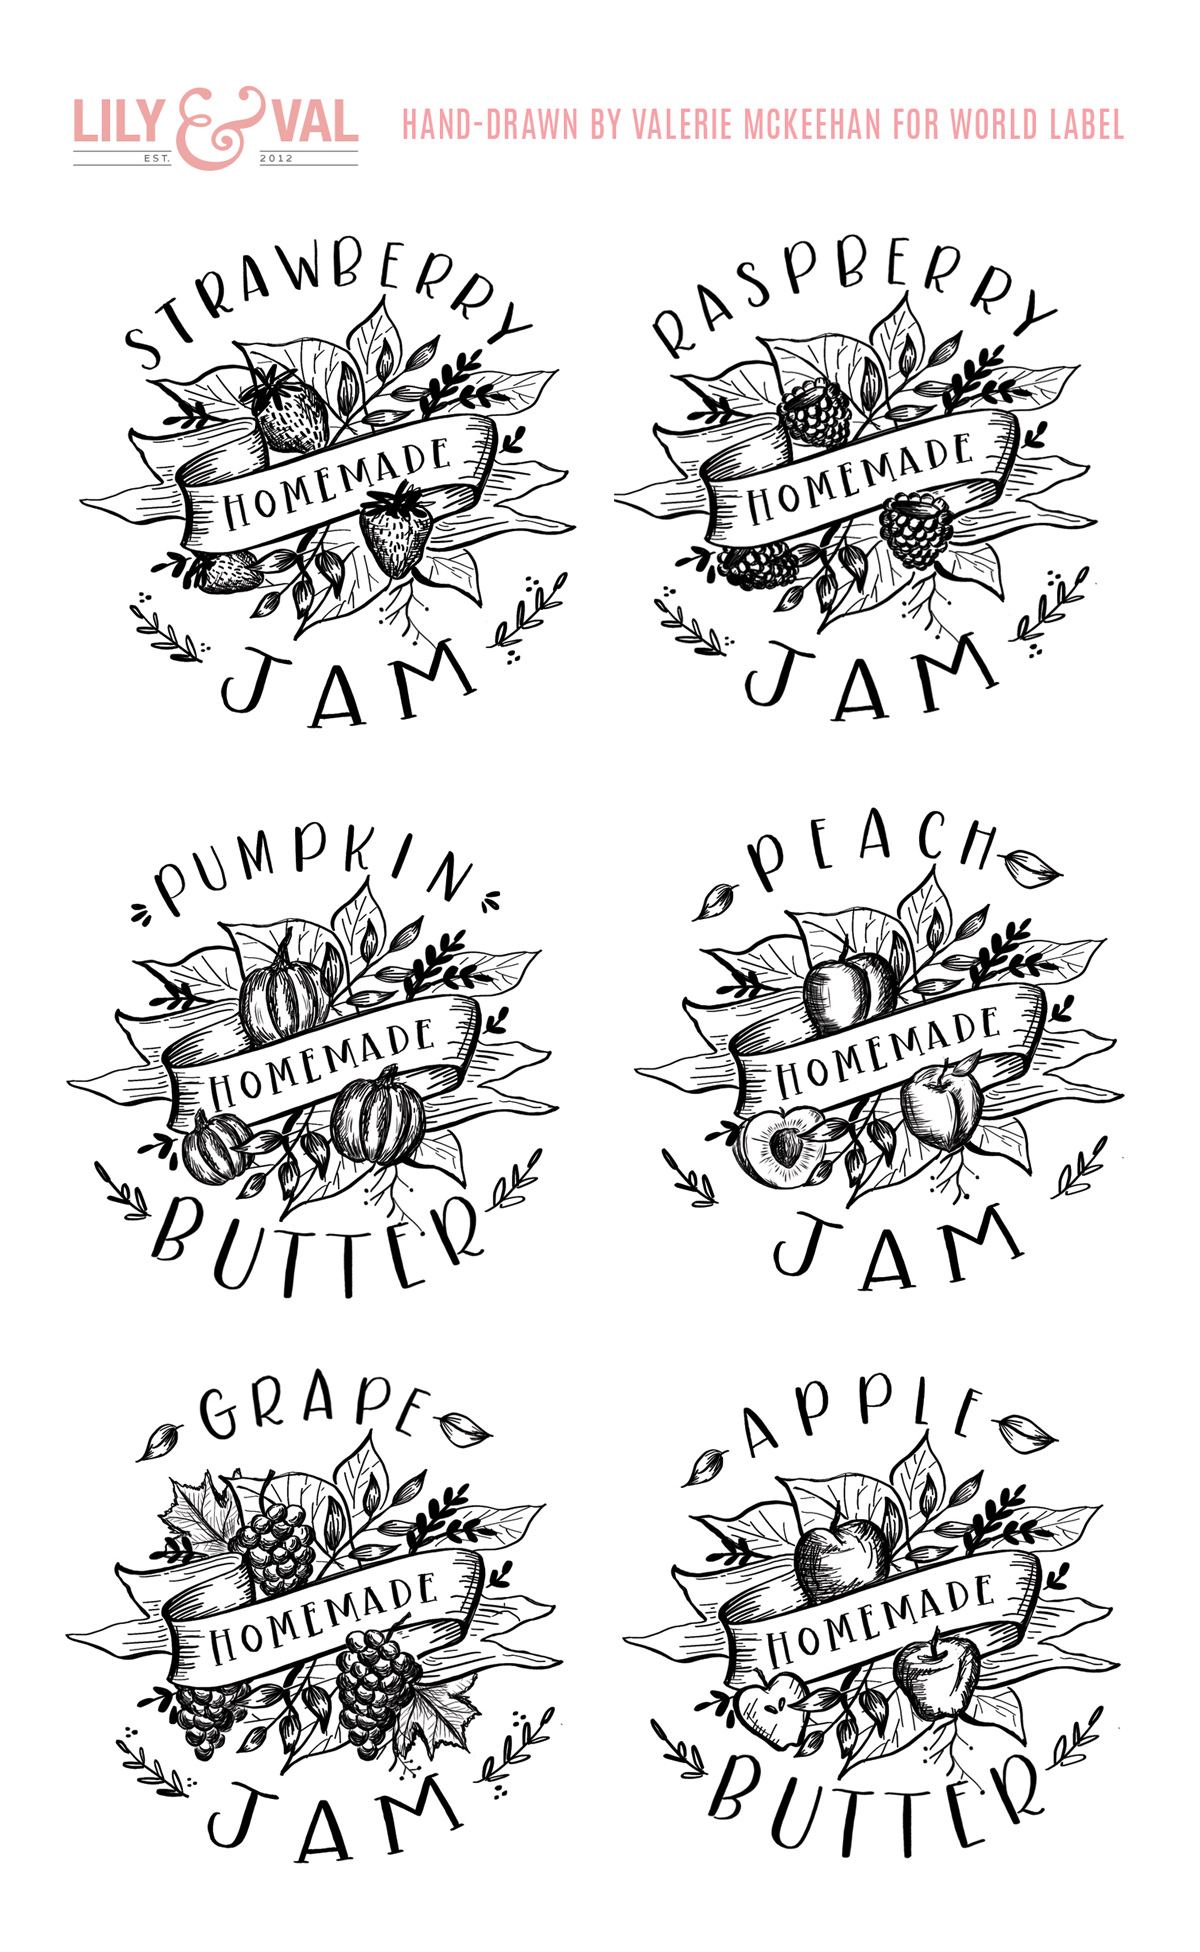 FREE Lily & Val for World Label Hand-Drawn Jam Label Downloads! Strawberry, Peach, Grape, Raspberry Jam plus Pumpkin & Apple Butter!